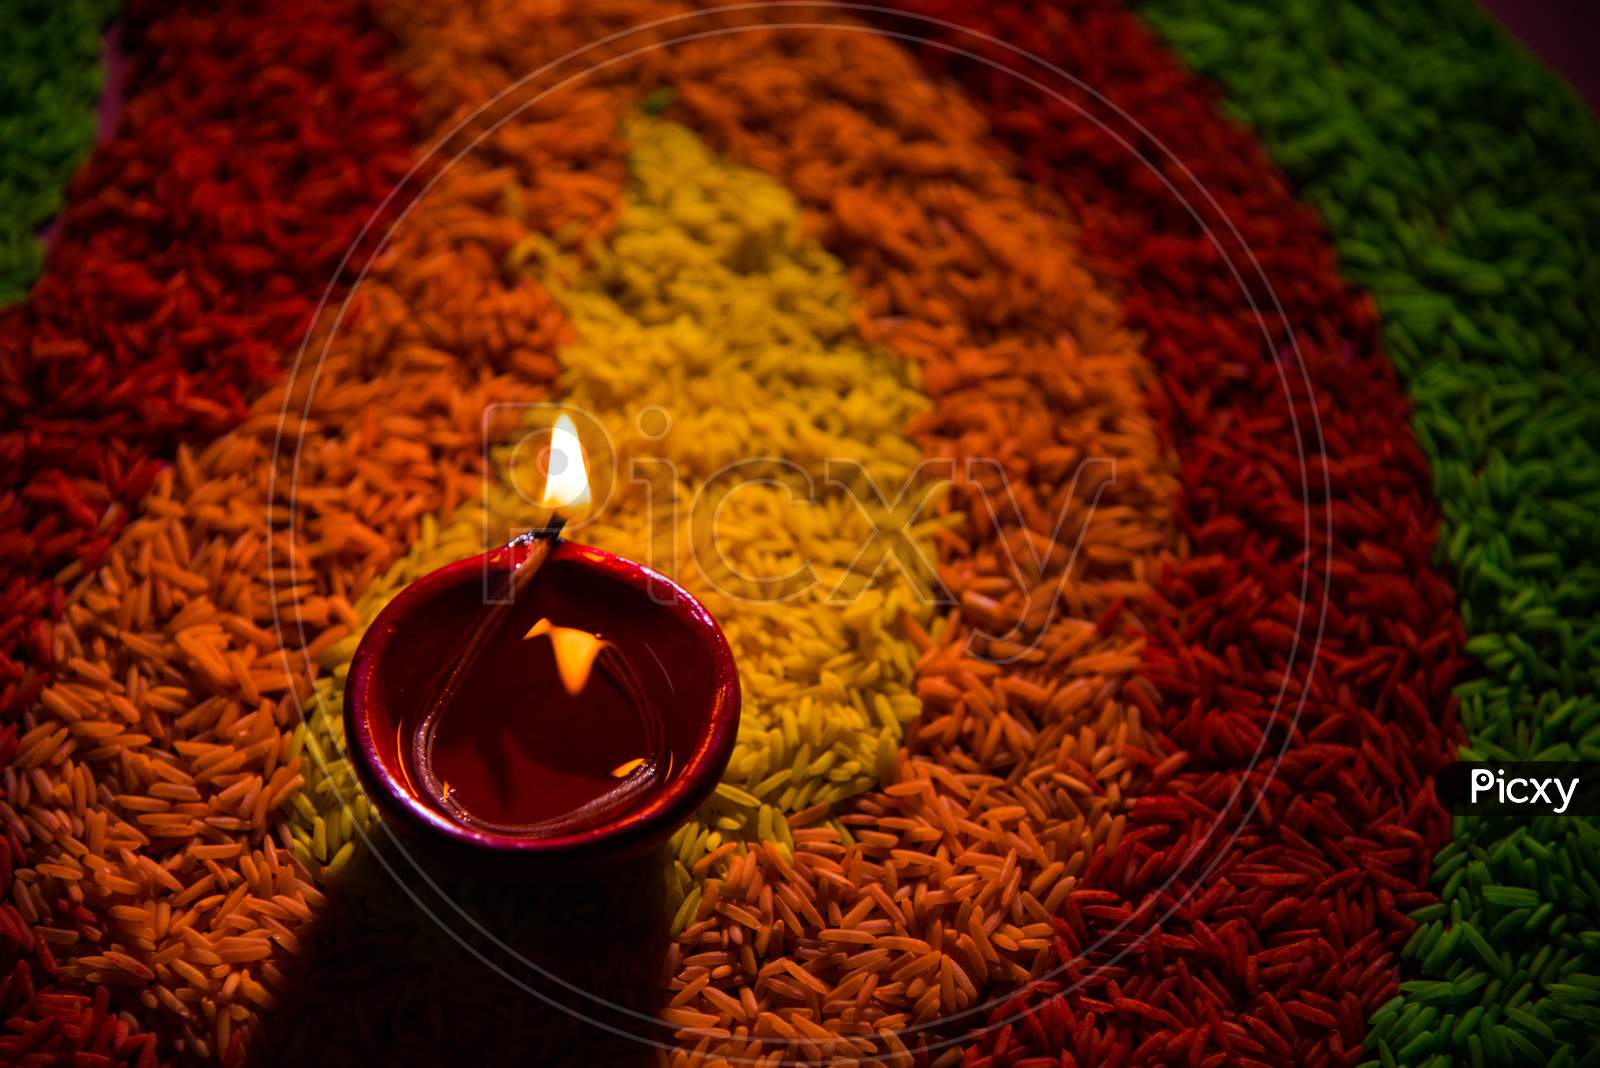 Diwali Diya over Rangoli made using Colourful Rice grains